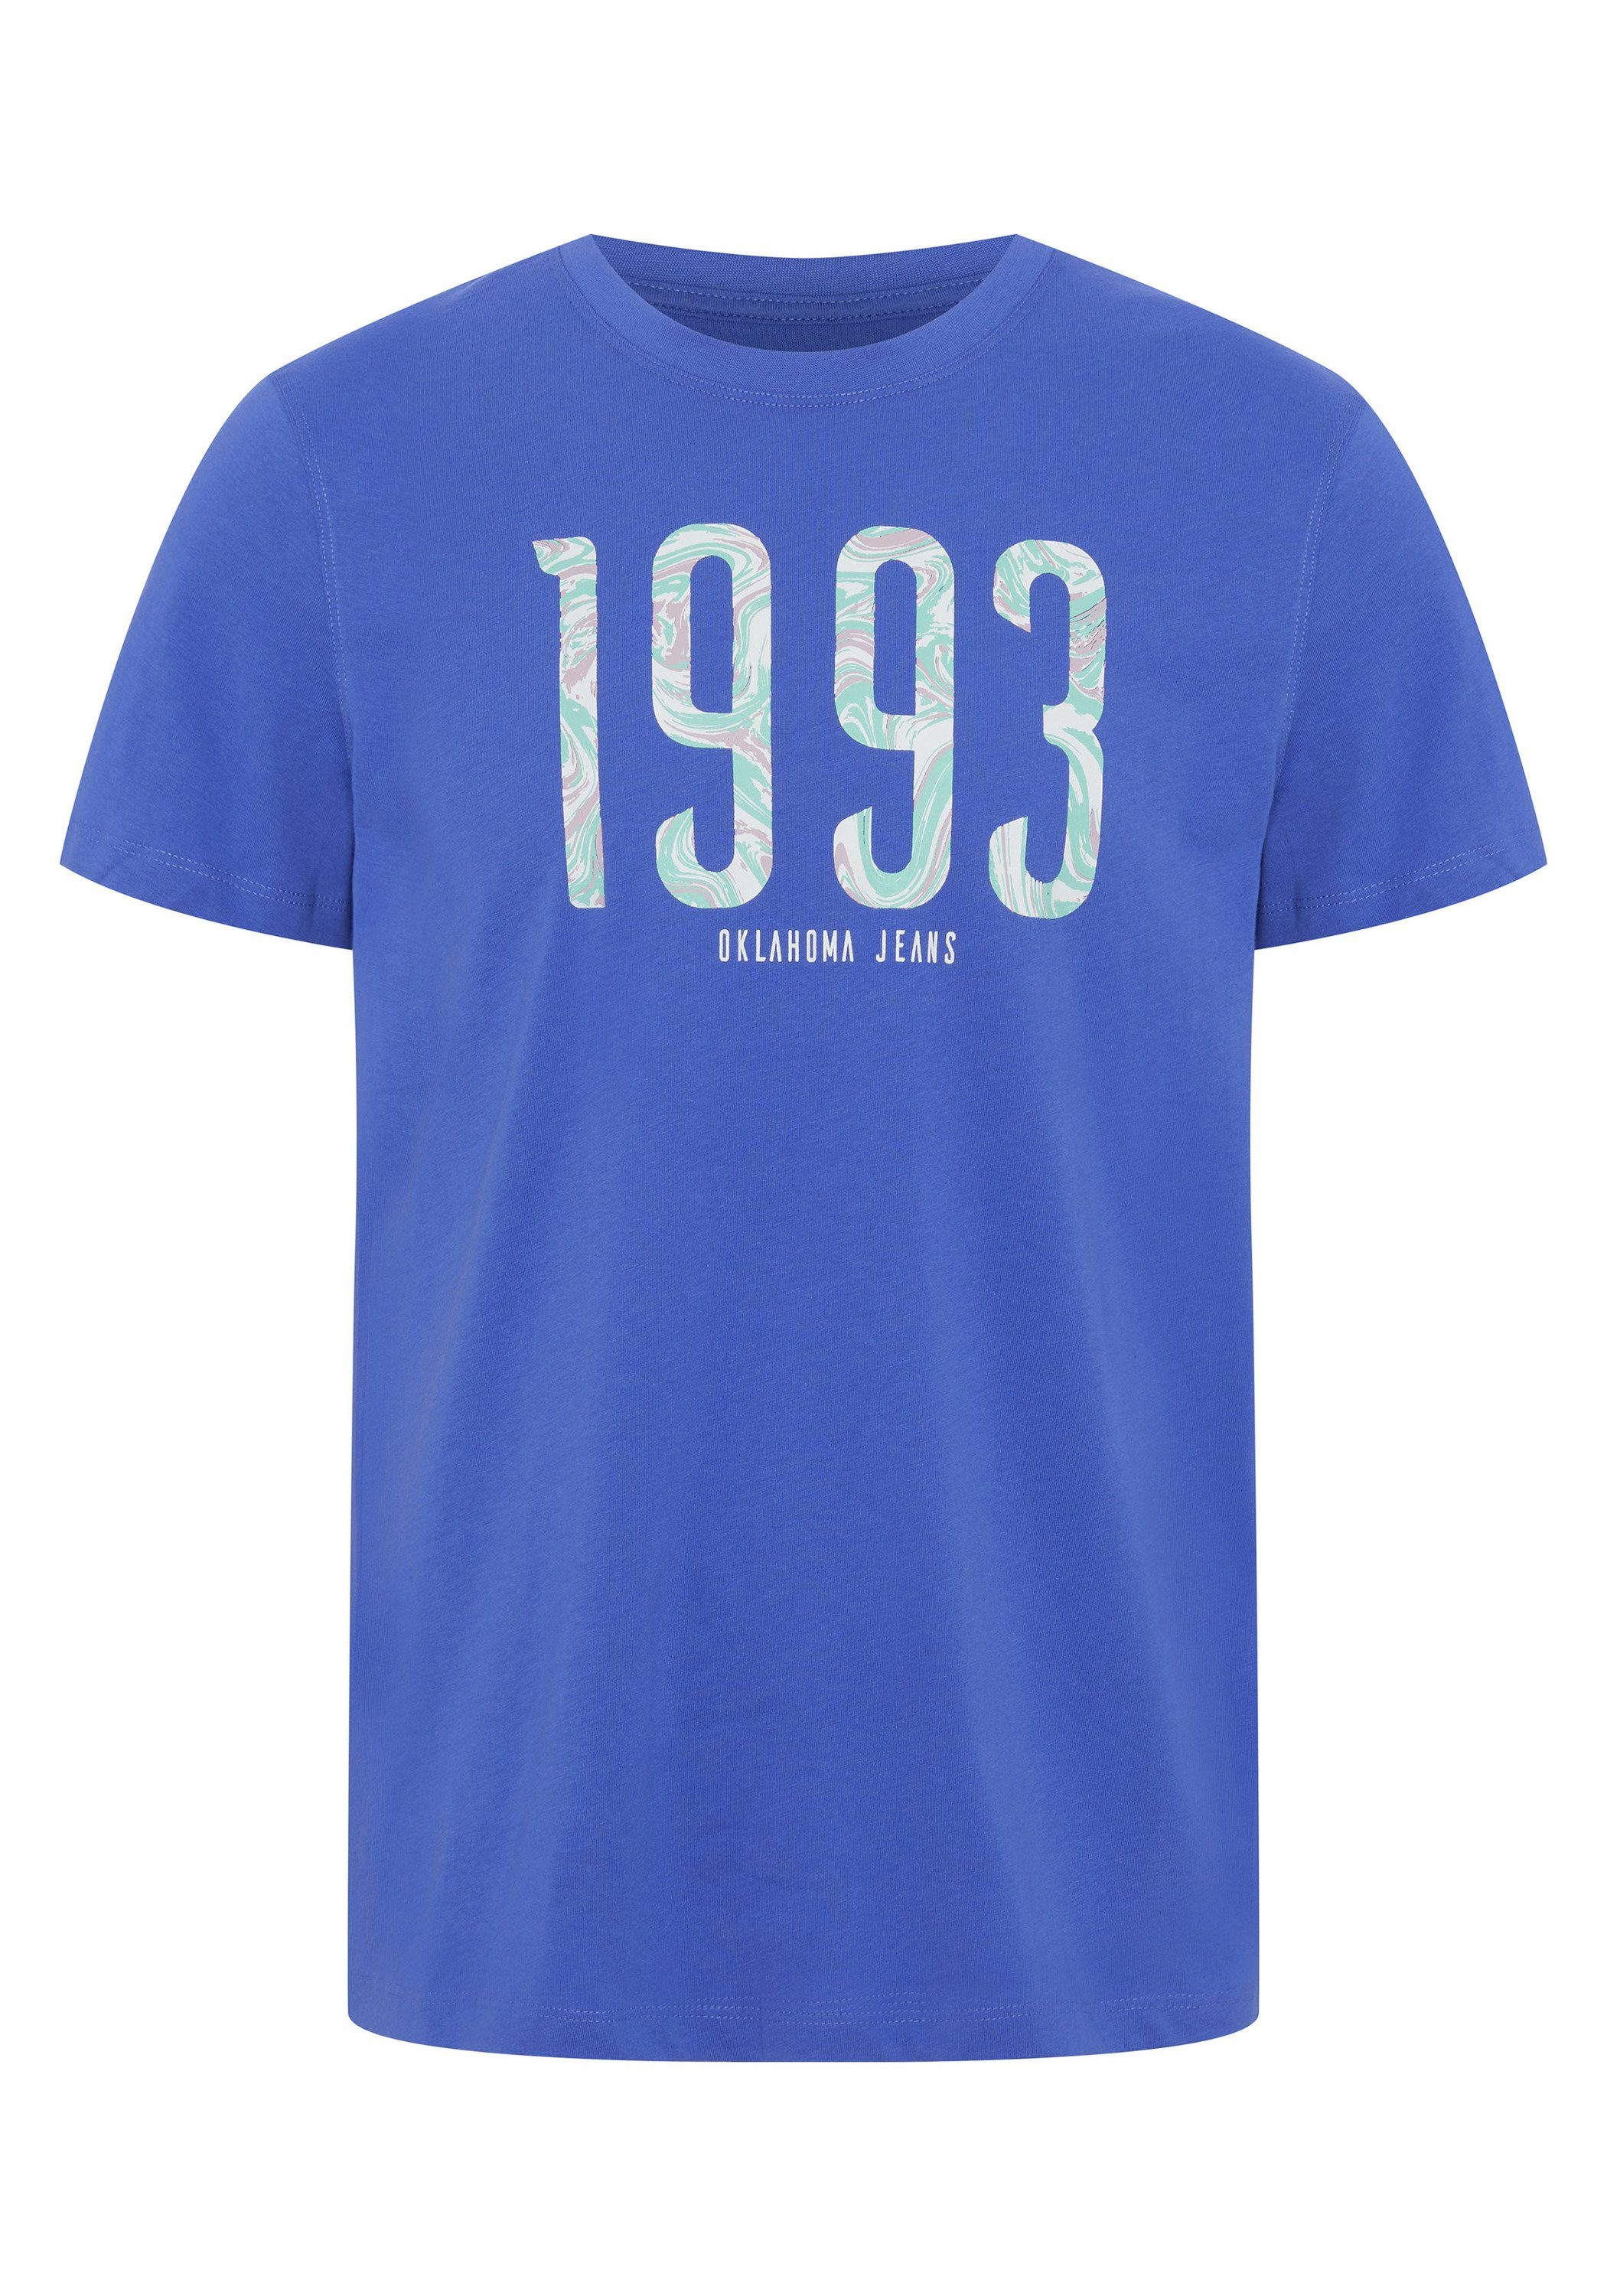 Blue Dazzling Print-Shirt mit Oklahoma Jeans 1993-Print 18-3949